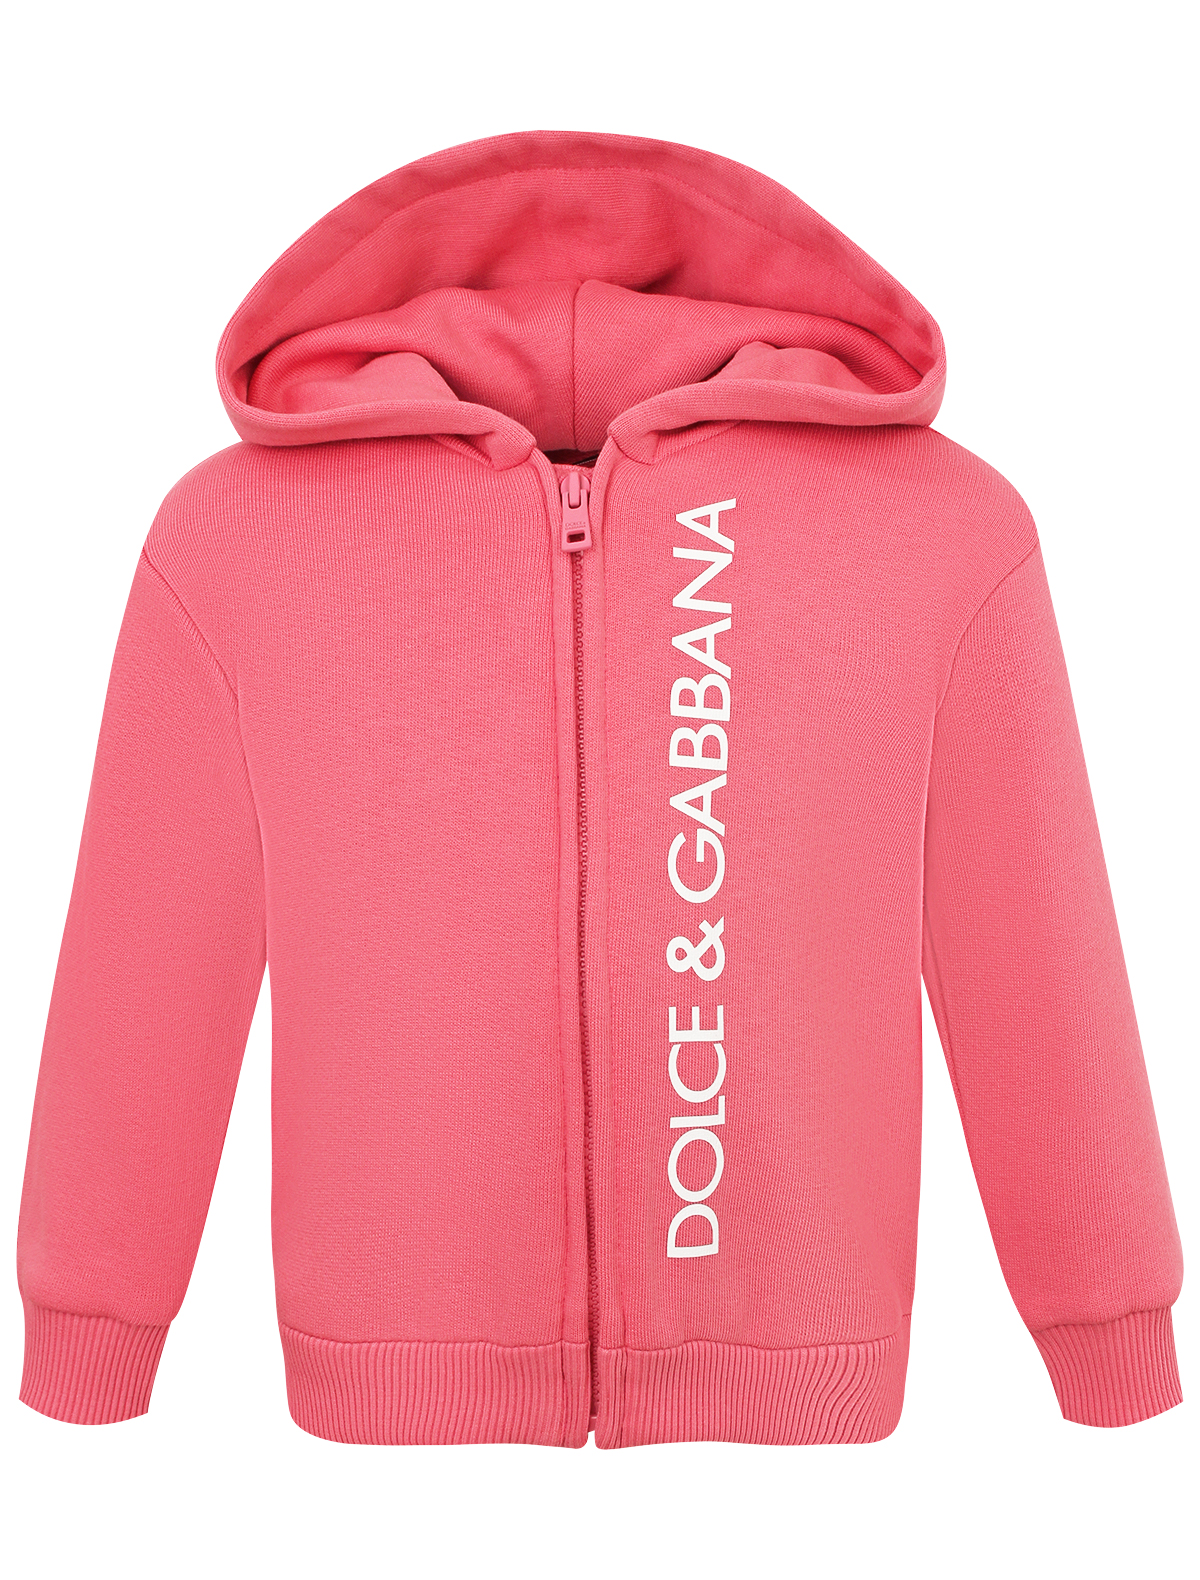 Толстовка Dolce & Gabbana 2662330, цвет розовый, размер 2 0074509410769 - фото 1